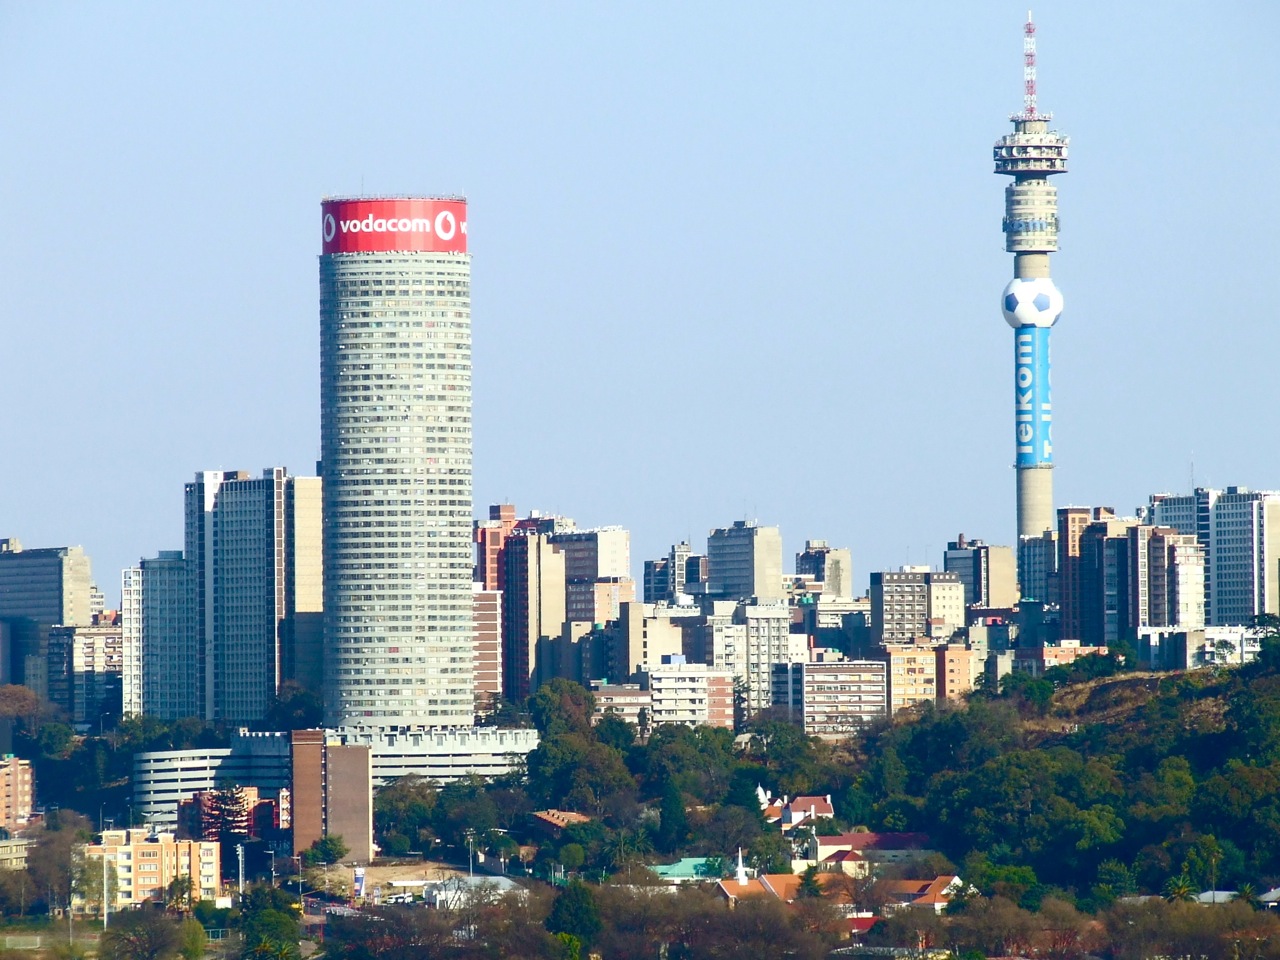 Vodacom Tower, Johannesburg RSA - by finepixtrix